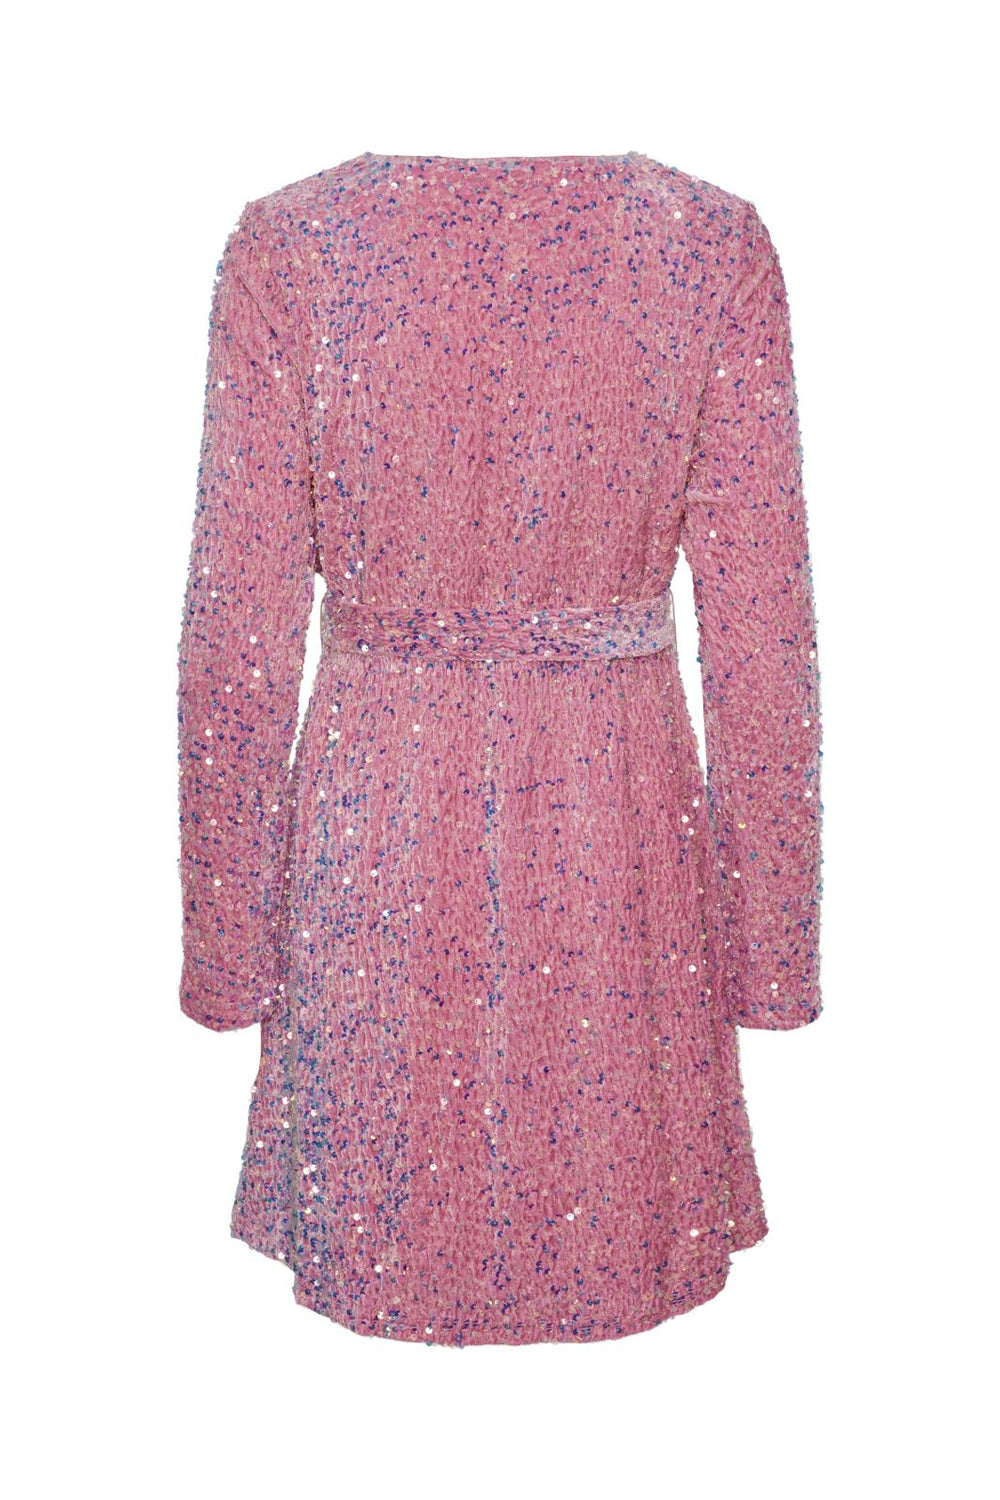 Pieces - Pcella Ls Sequin Wrap Dress - 4554784 Hot Pink Sequens